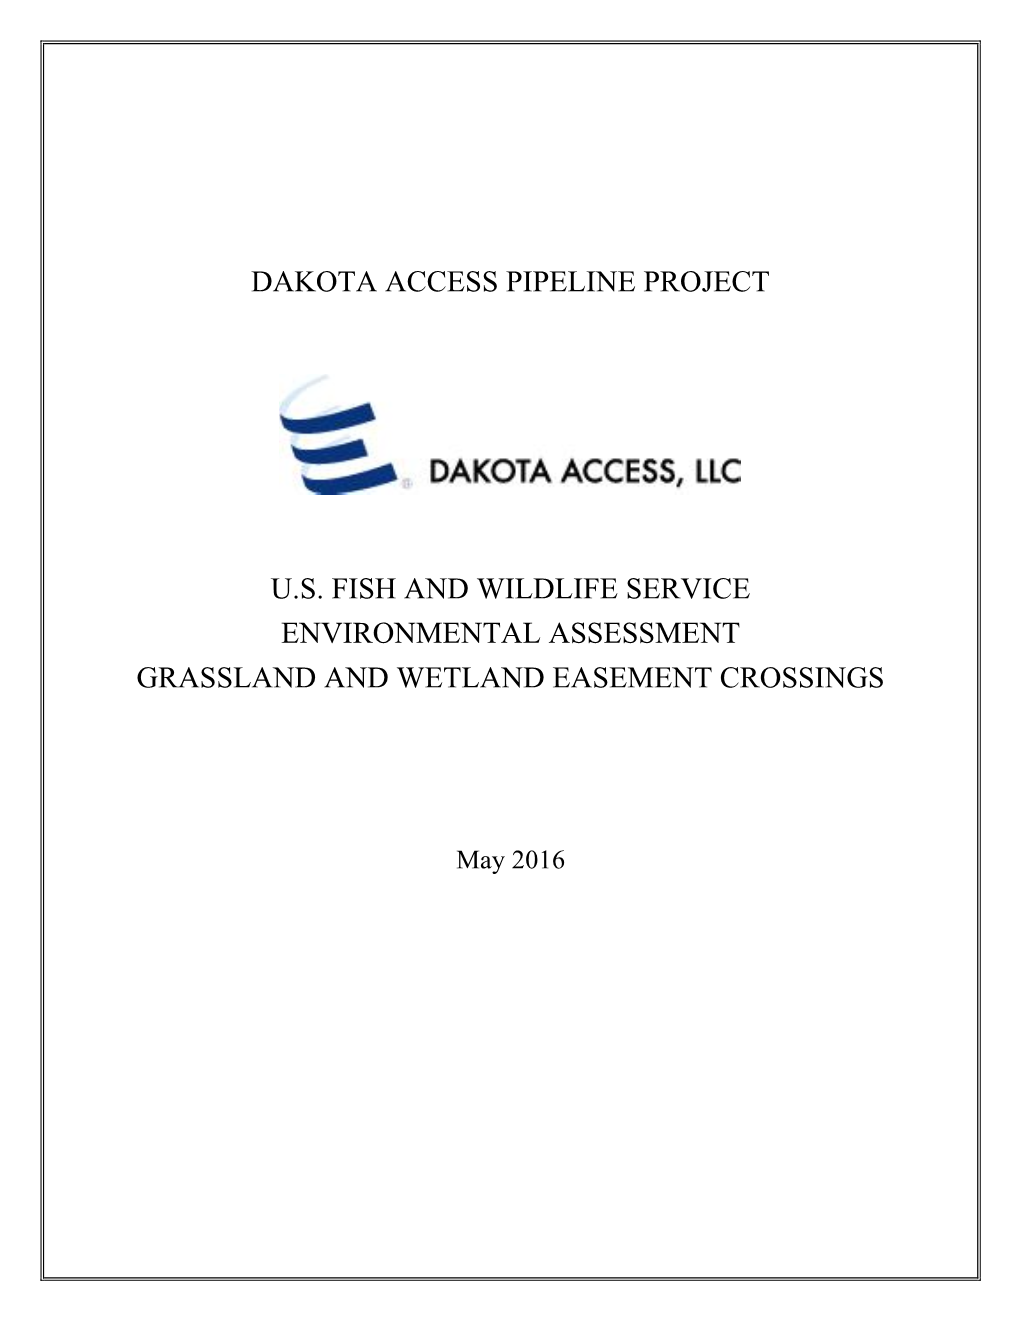 Dakota Access Pipeline Project, U.S. Fish